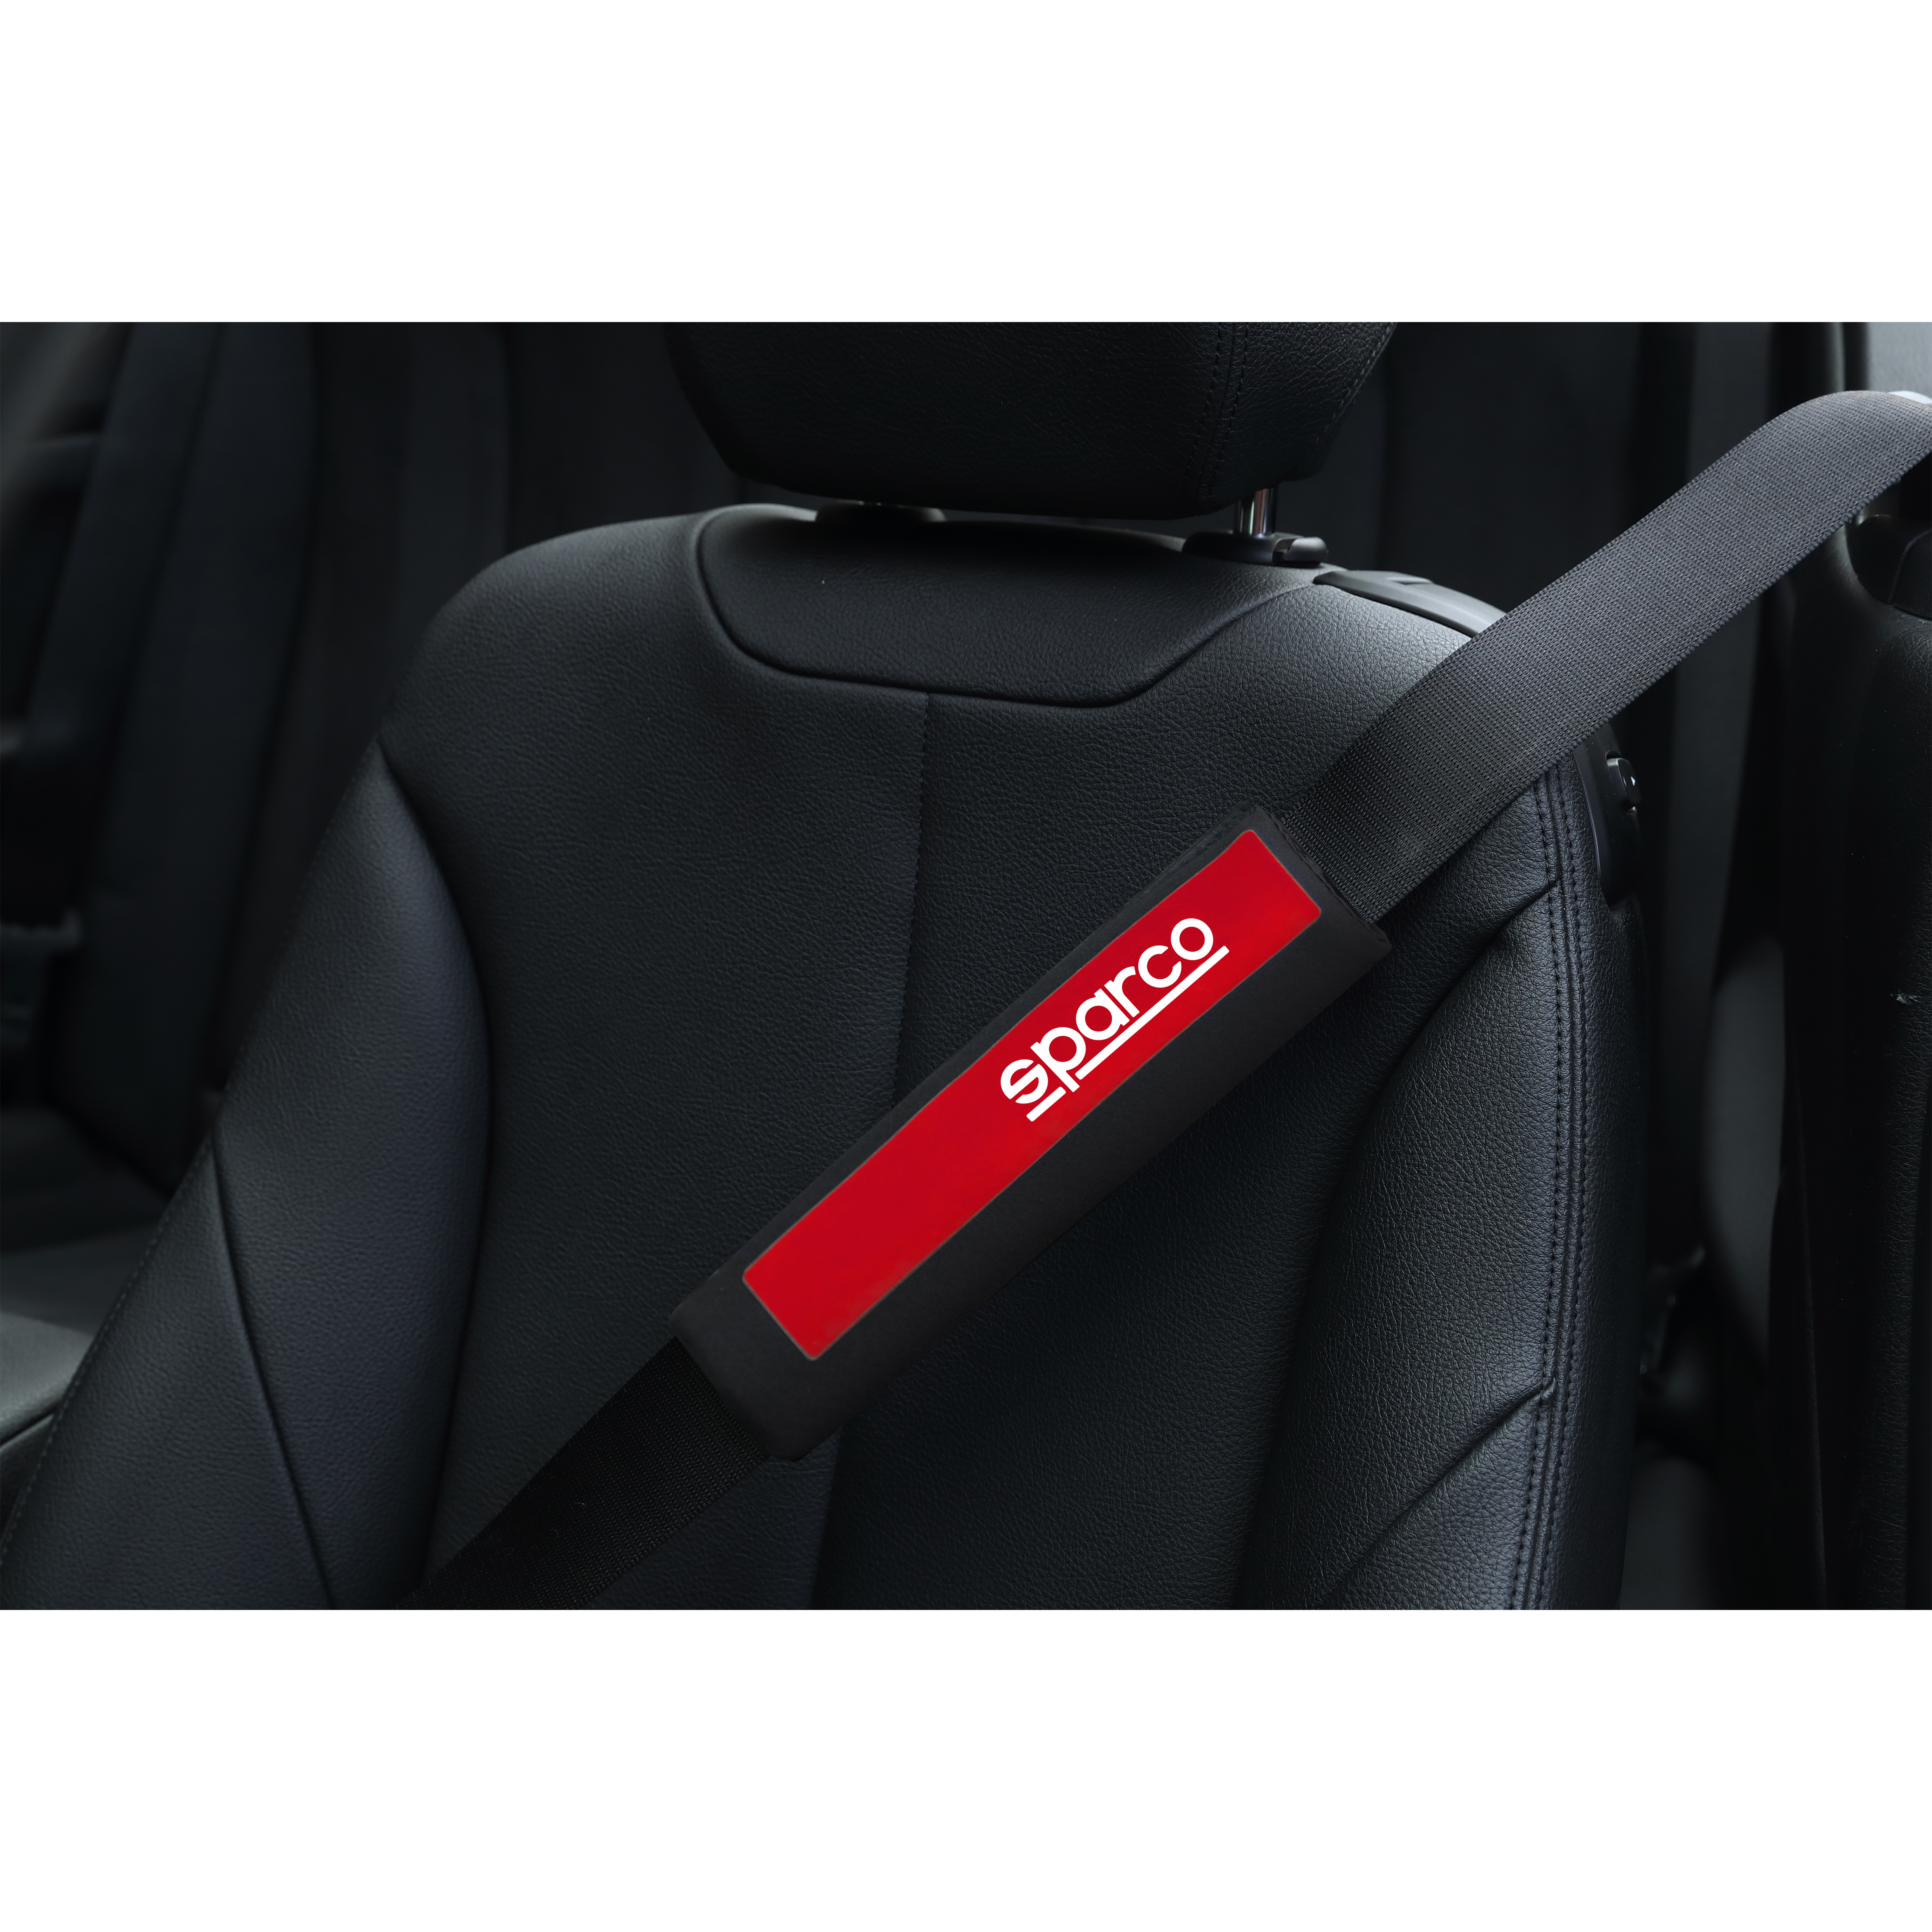 Seat Belt Pads - Sparco Corsa